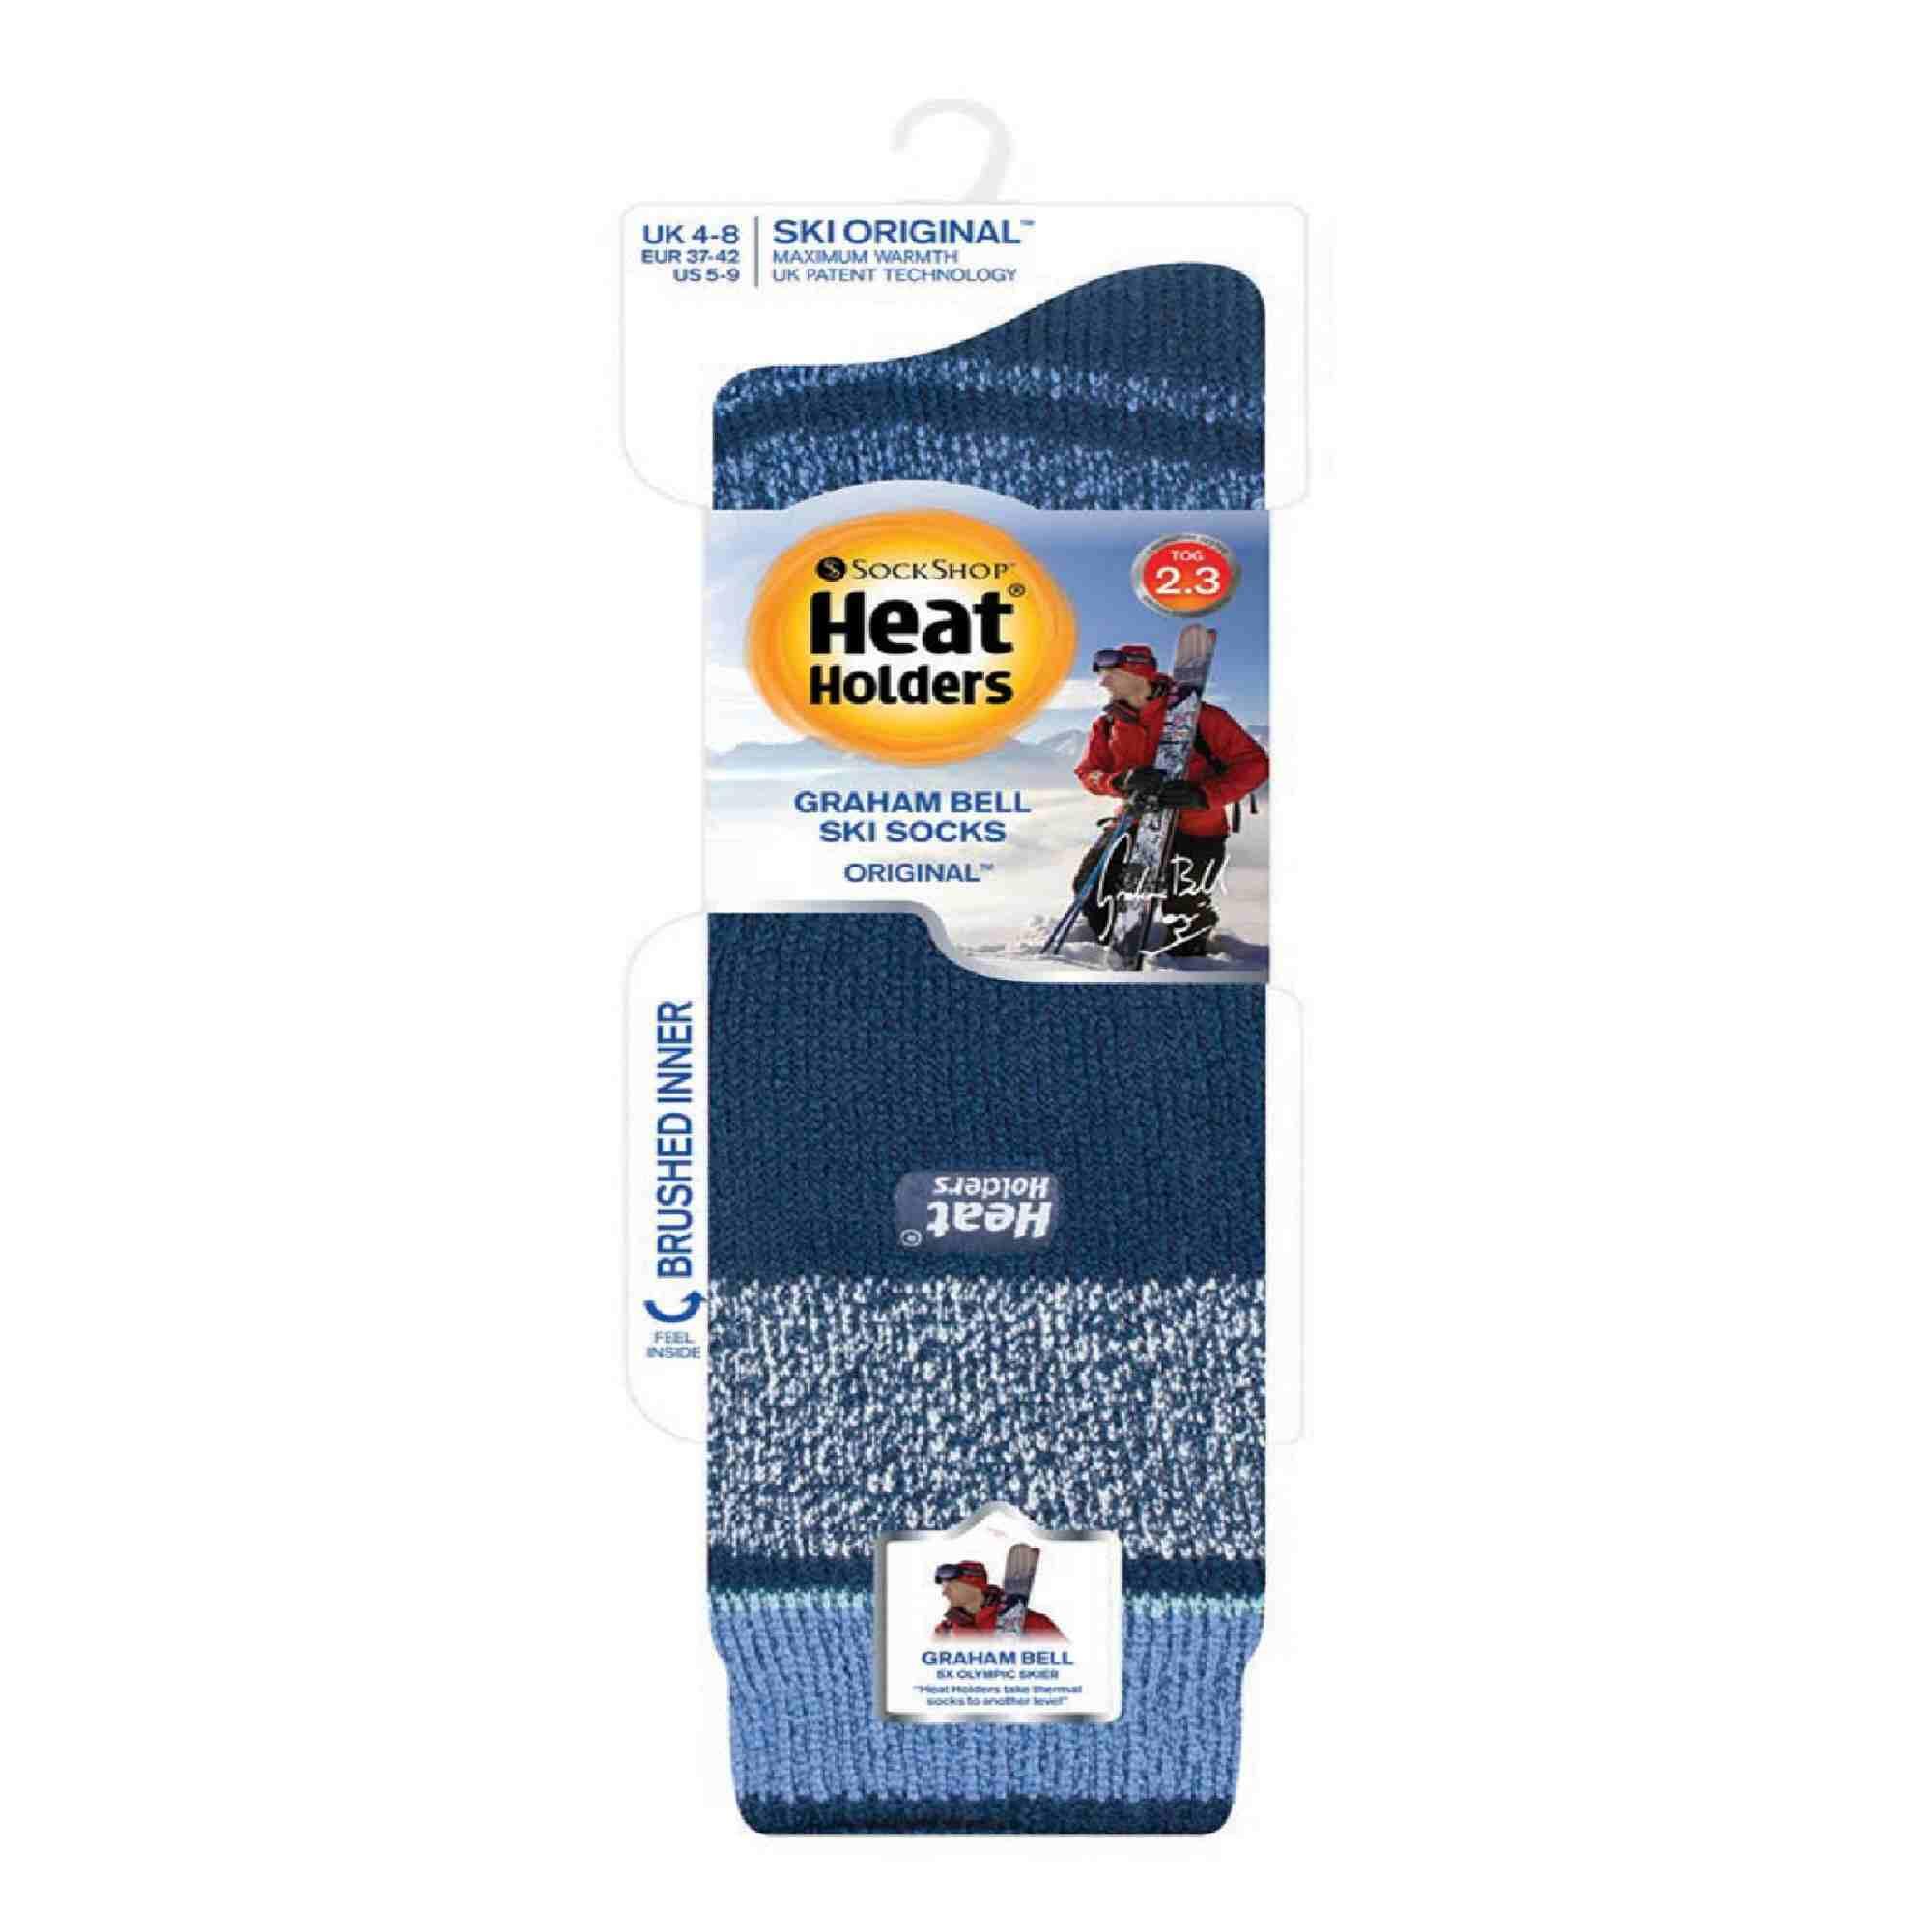 Ladies Thermal Extra Long 2.3 TOG Winter Knee High Ski Socks 2/7